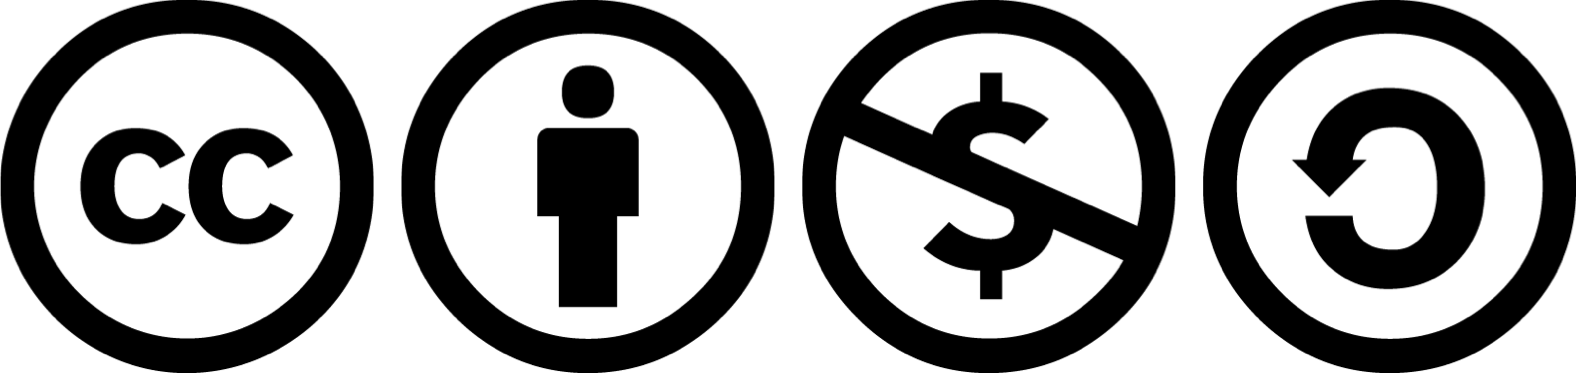 creative commons symbol